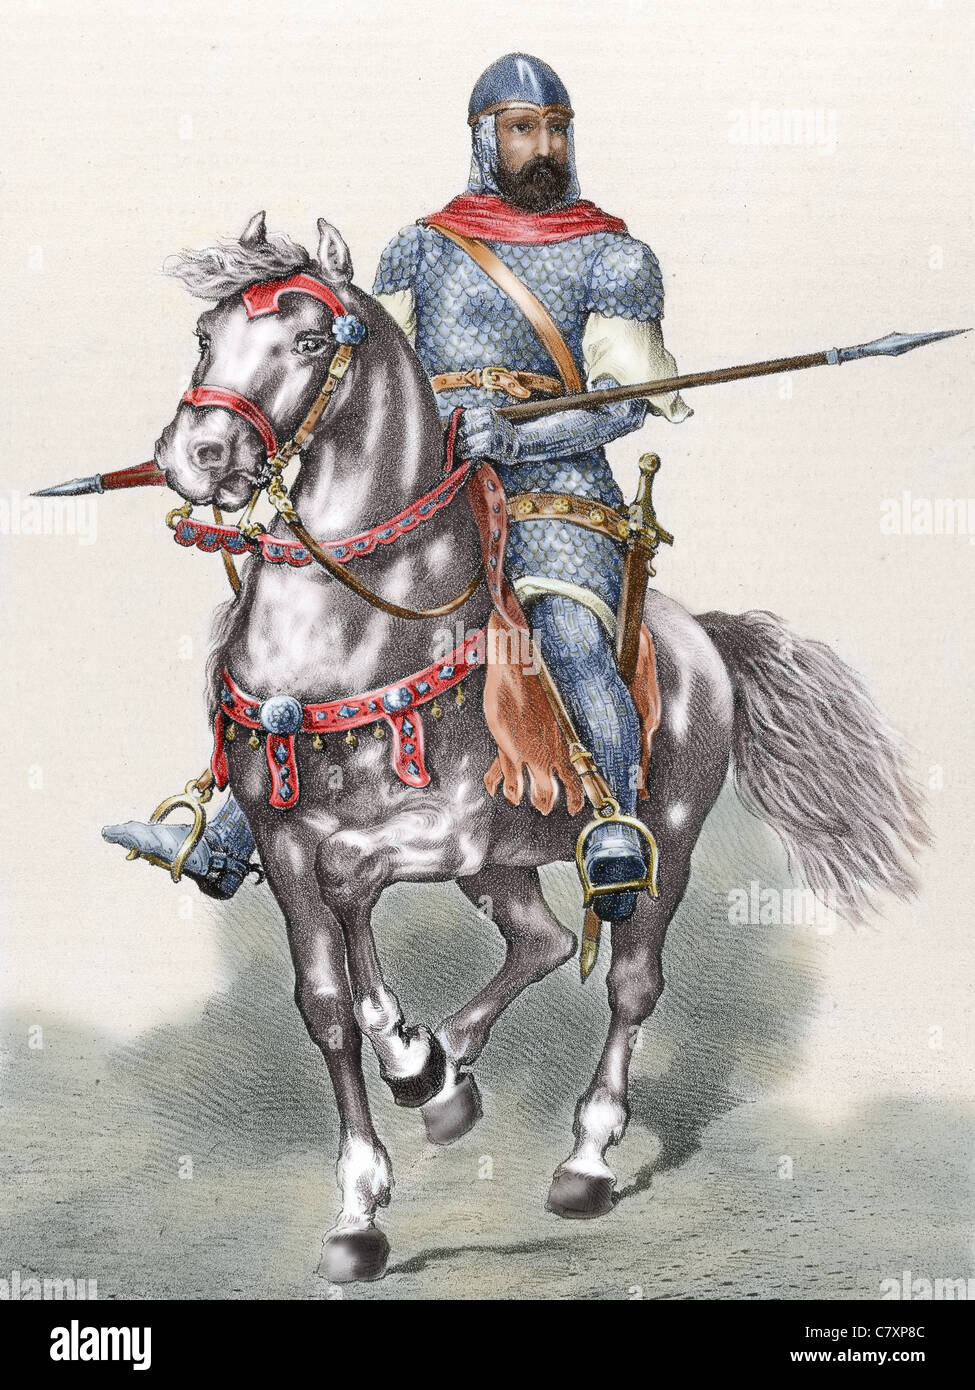 Rodrigo Diaz de Vivar (c.1043-1099), conosciuta come El Cid. Nobile castigliano, capo militare e diplomatico. El Cid Babieca equitazione. Foto Stock